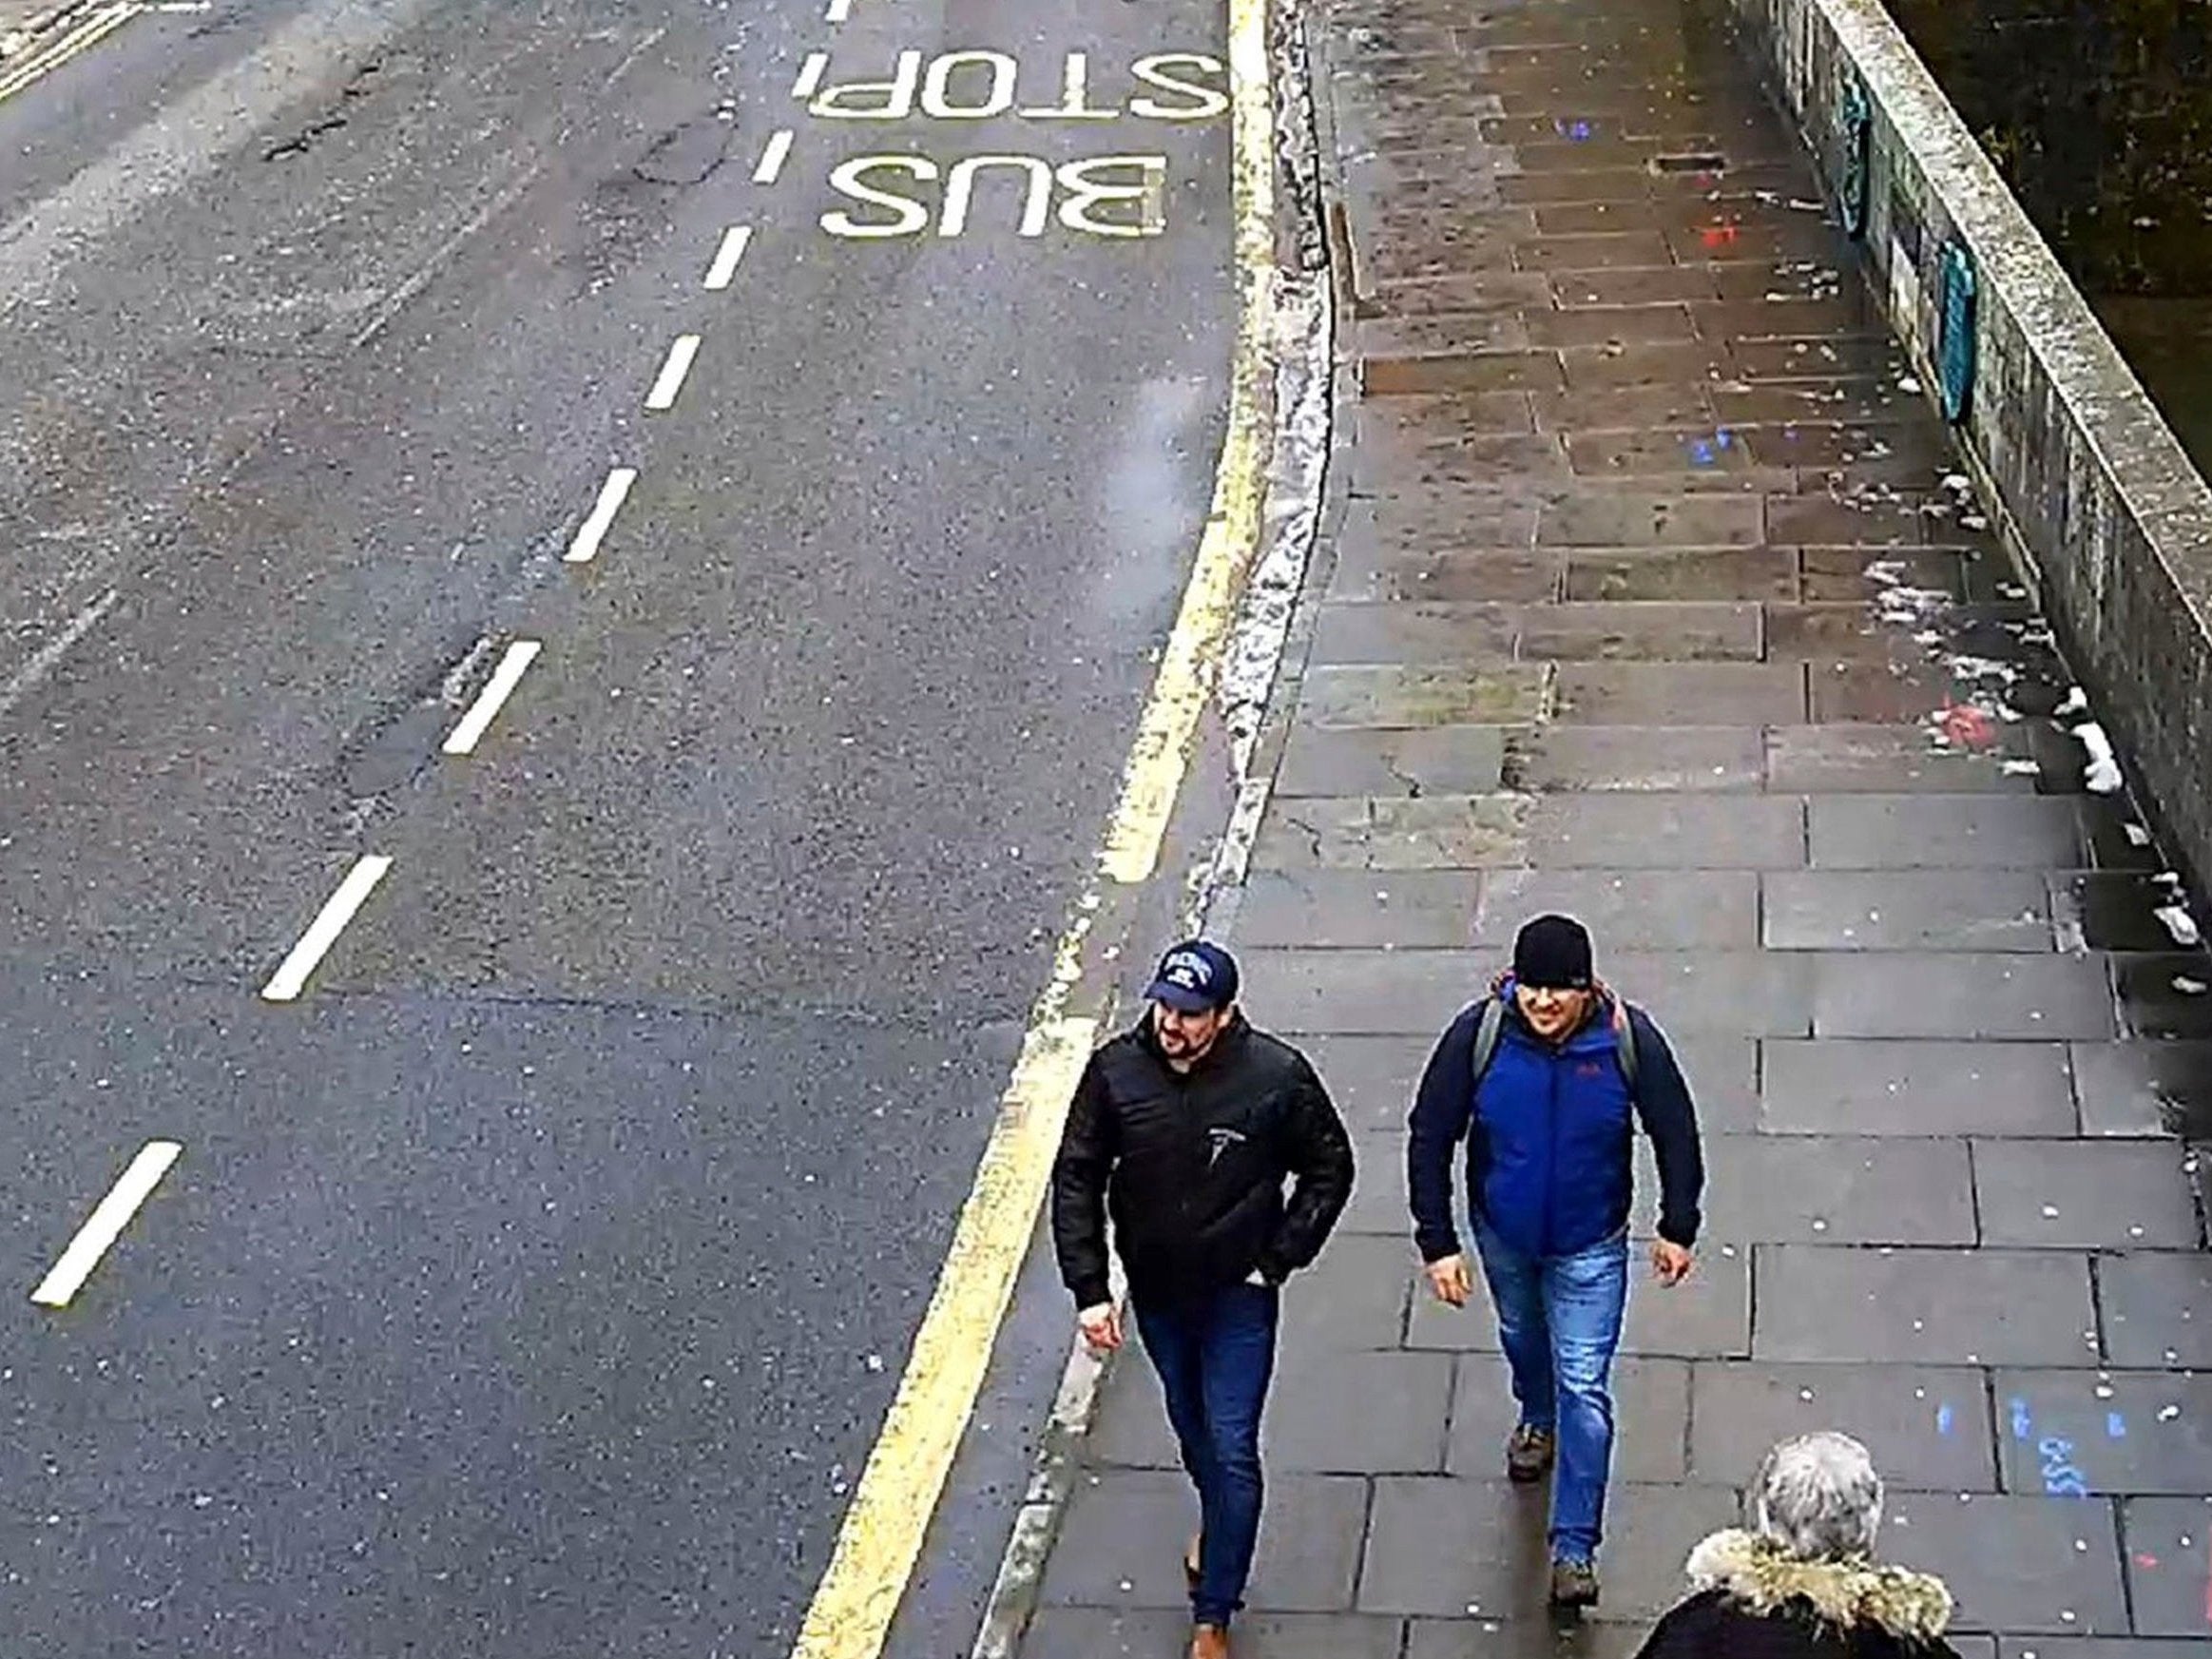 Suspects Ruslan Boshirov and Alexander Petrov were pictured on CCTV in Salisbury